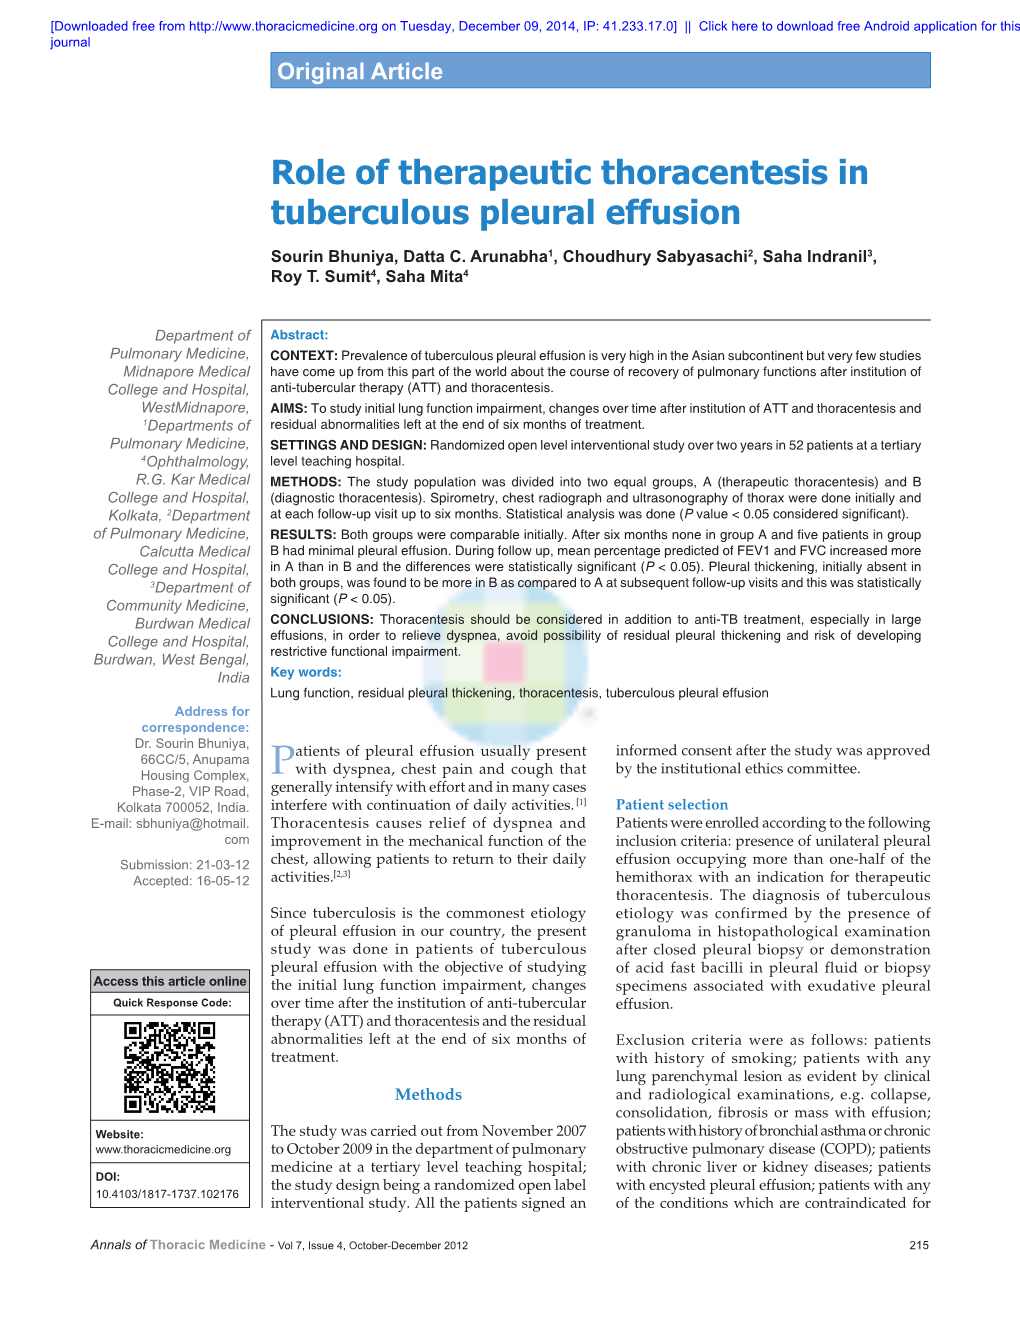 Role of Therapeutic Thoracentesis in Tuberculous Pleural Effusion